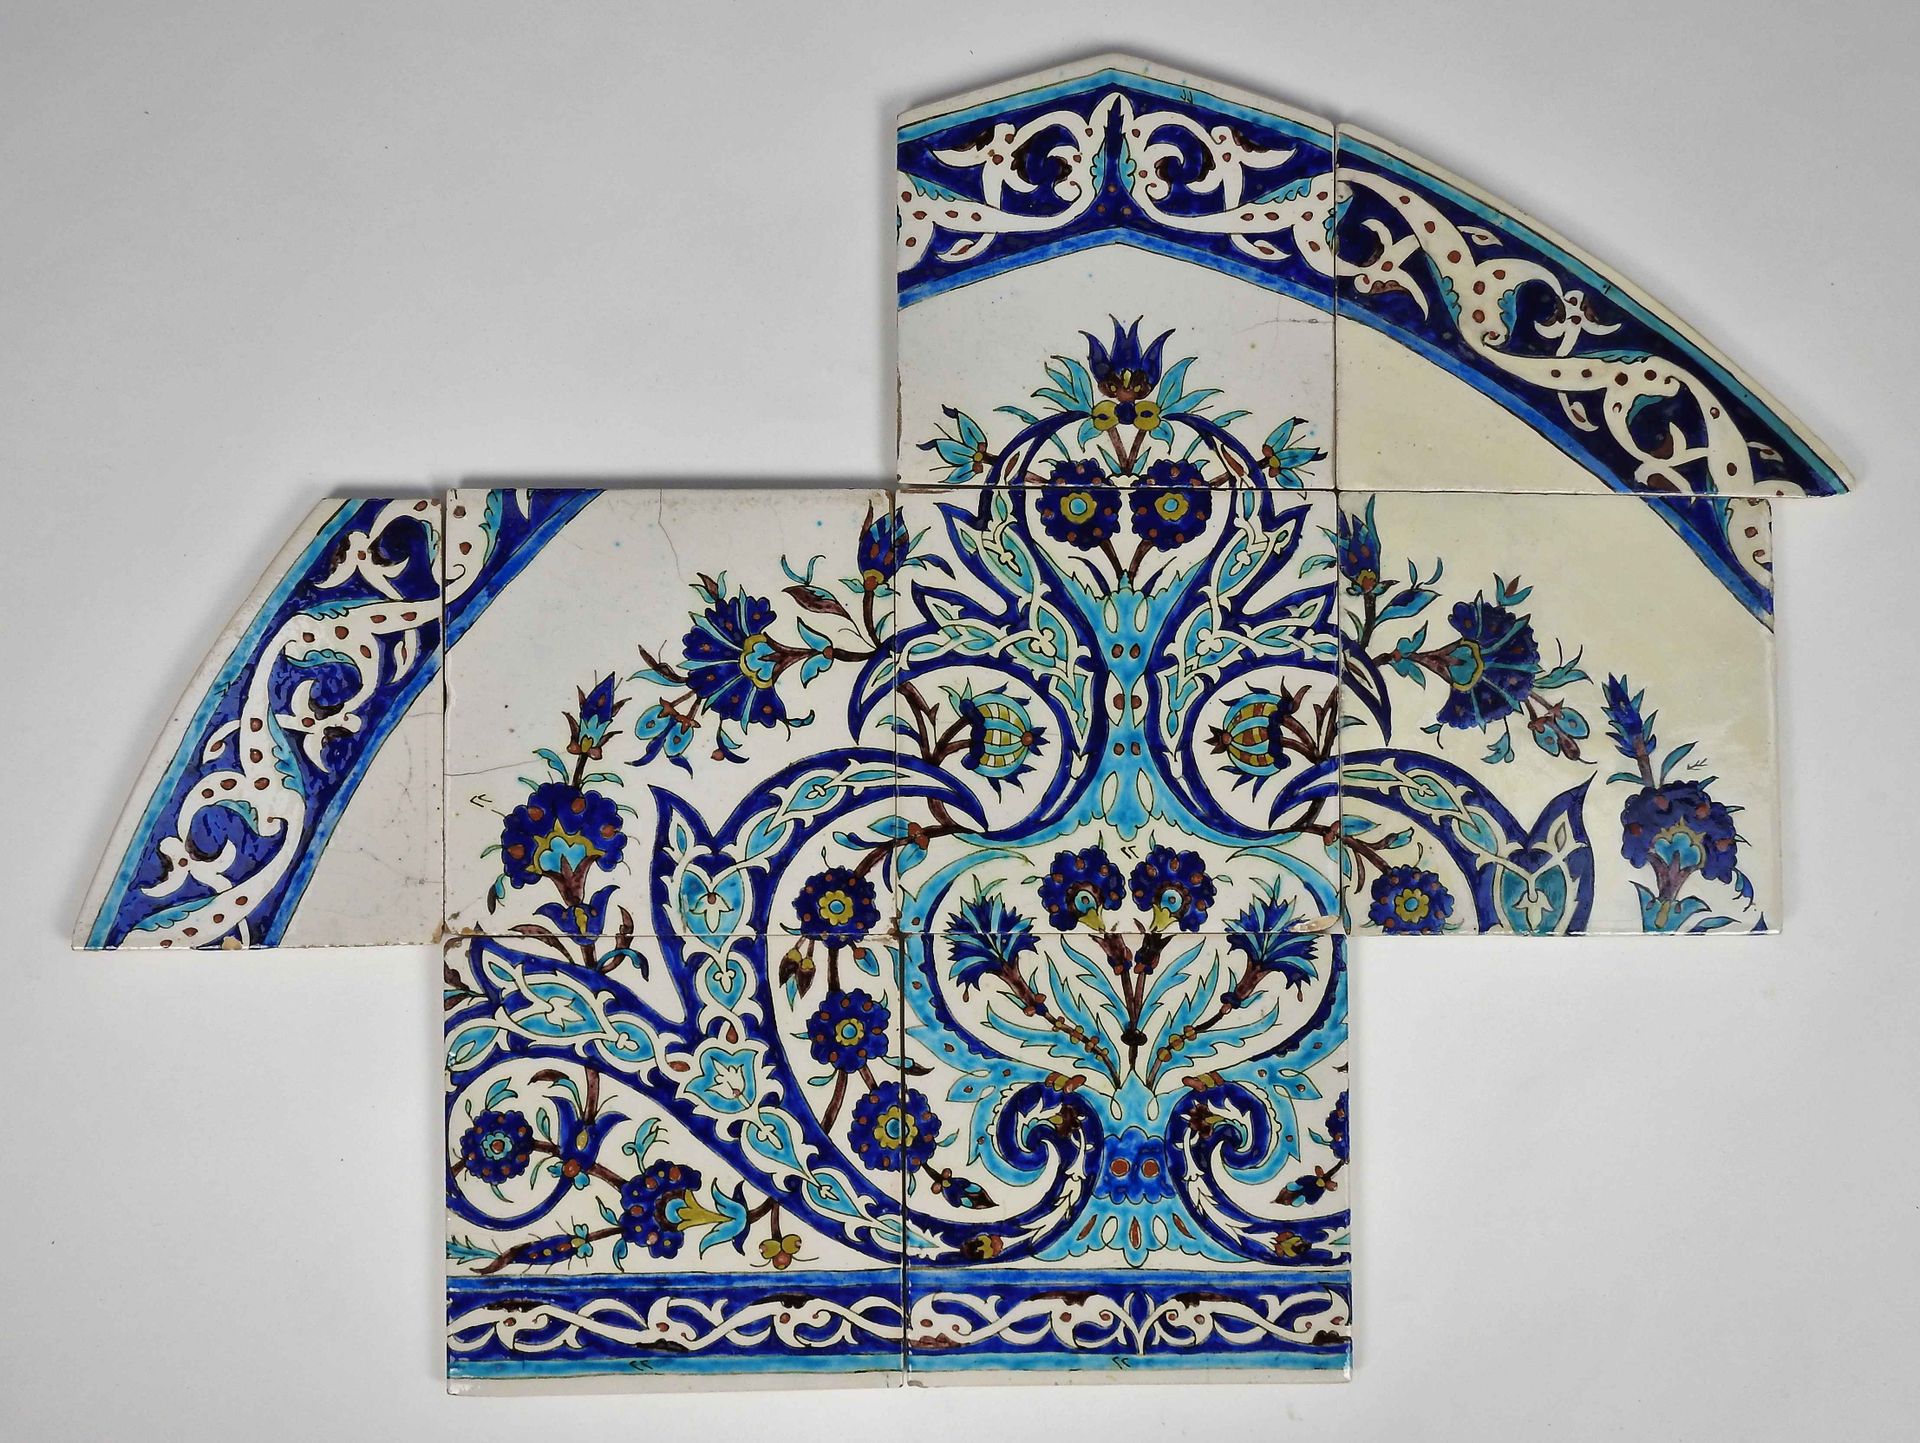 Null 
土耳其，奥斯曼帝国

库塔赫亚的多色陶瓷瓦片

约18世纪

60x 60厘米